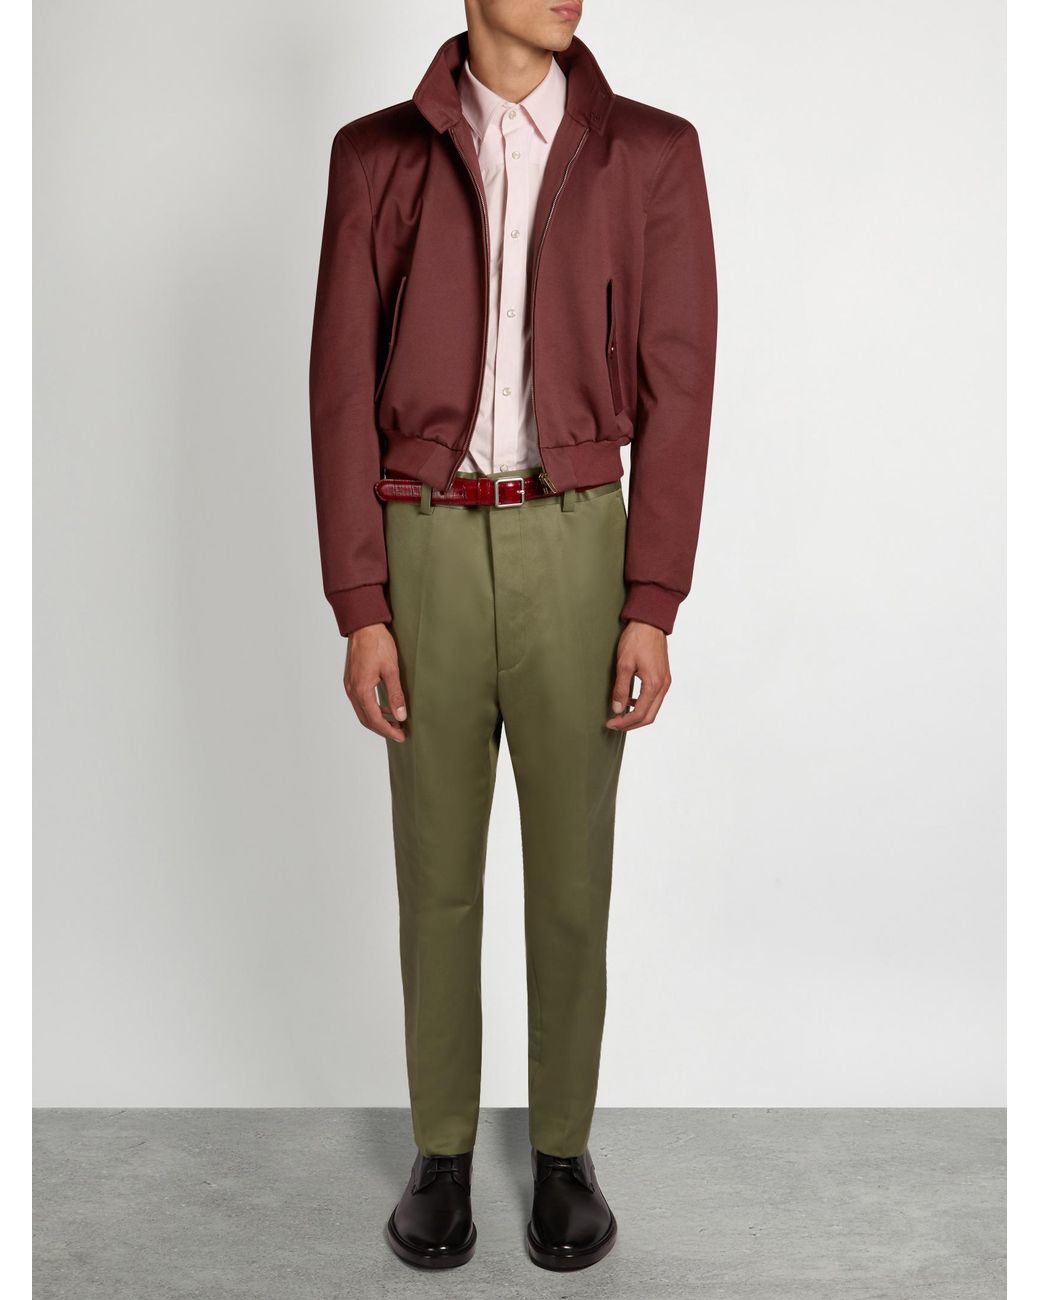 Balenciaga Harrington Cotton-blend Cropped Jacket for Men | Lyst